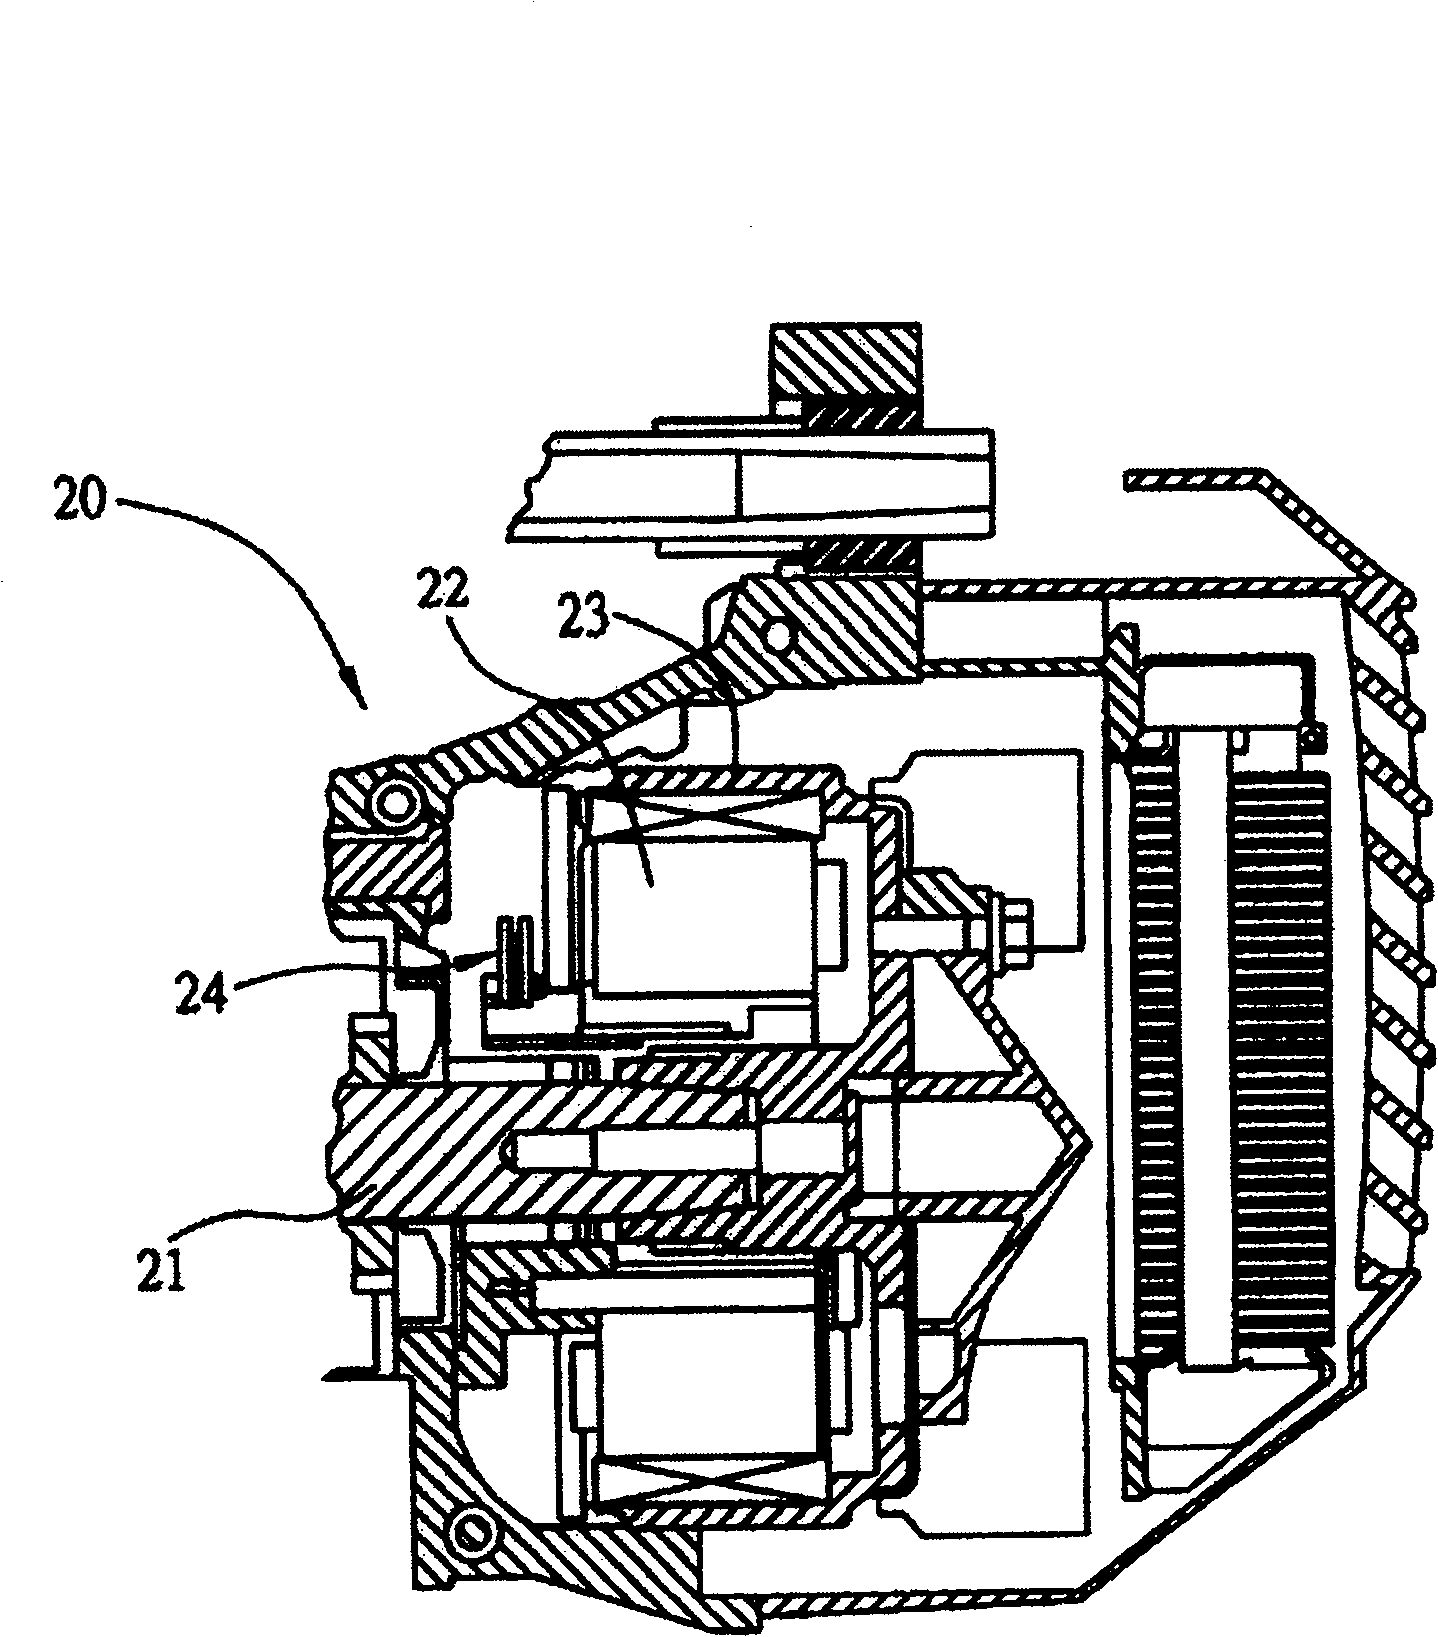 Composite power unit of engine